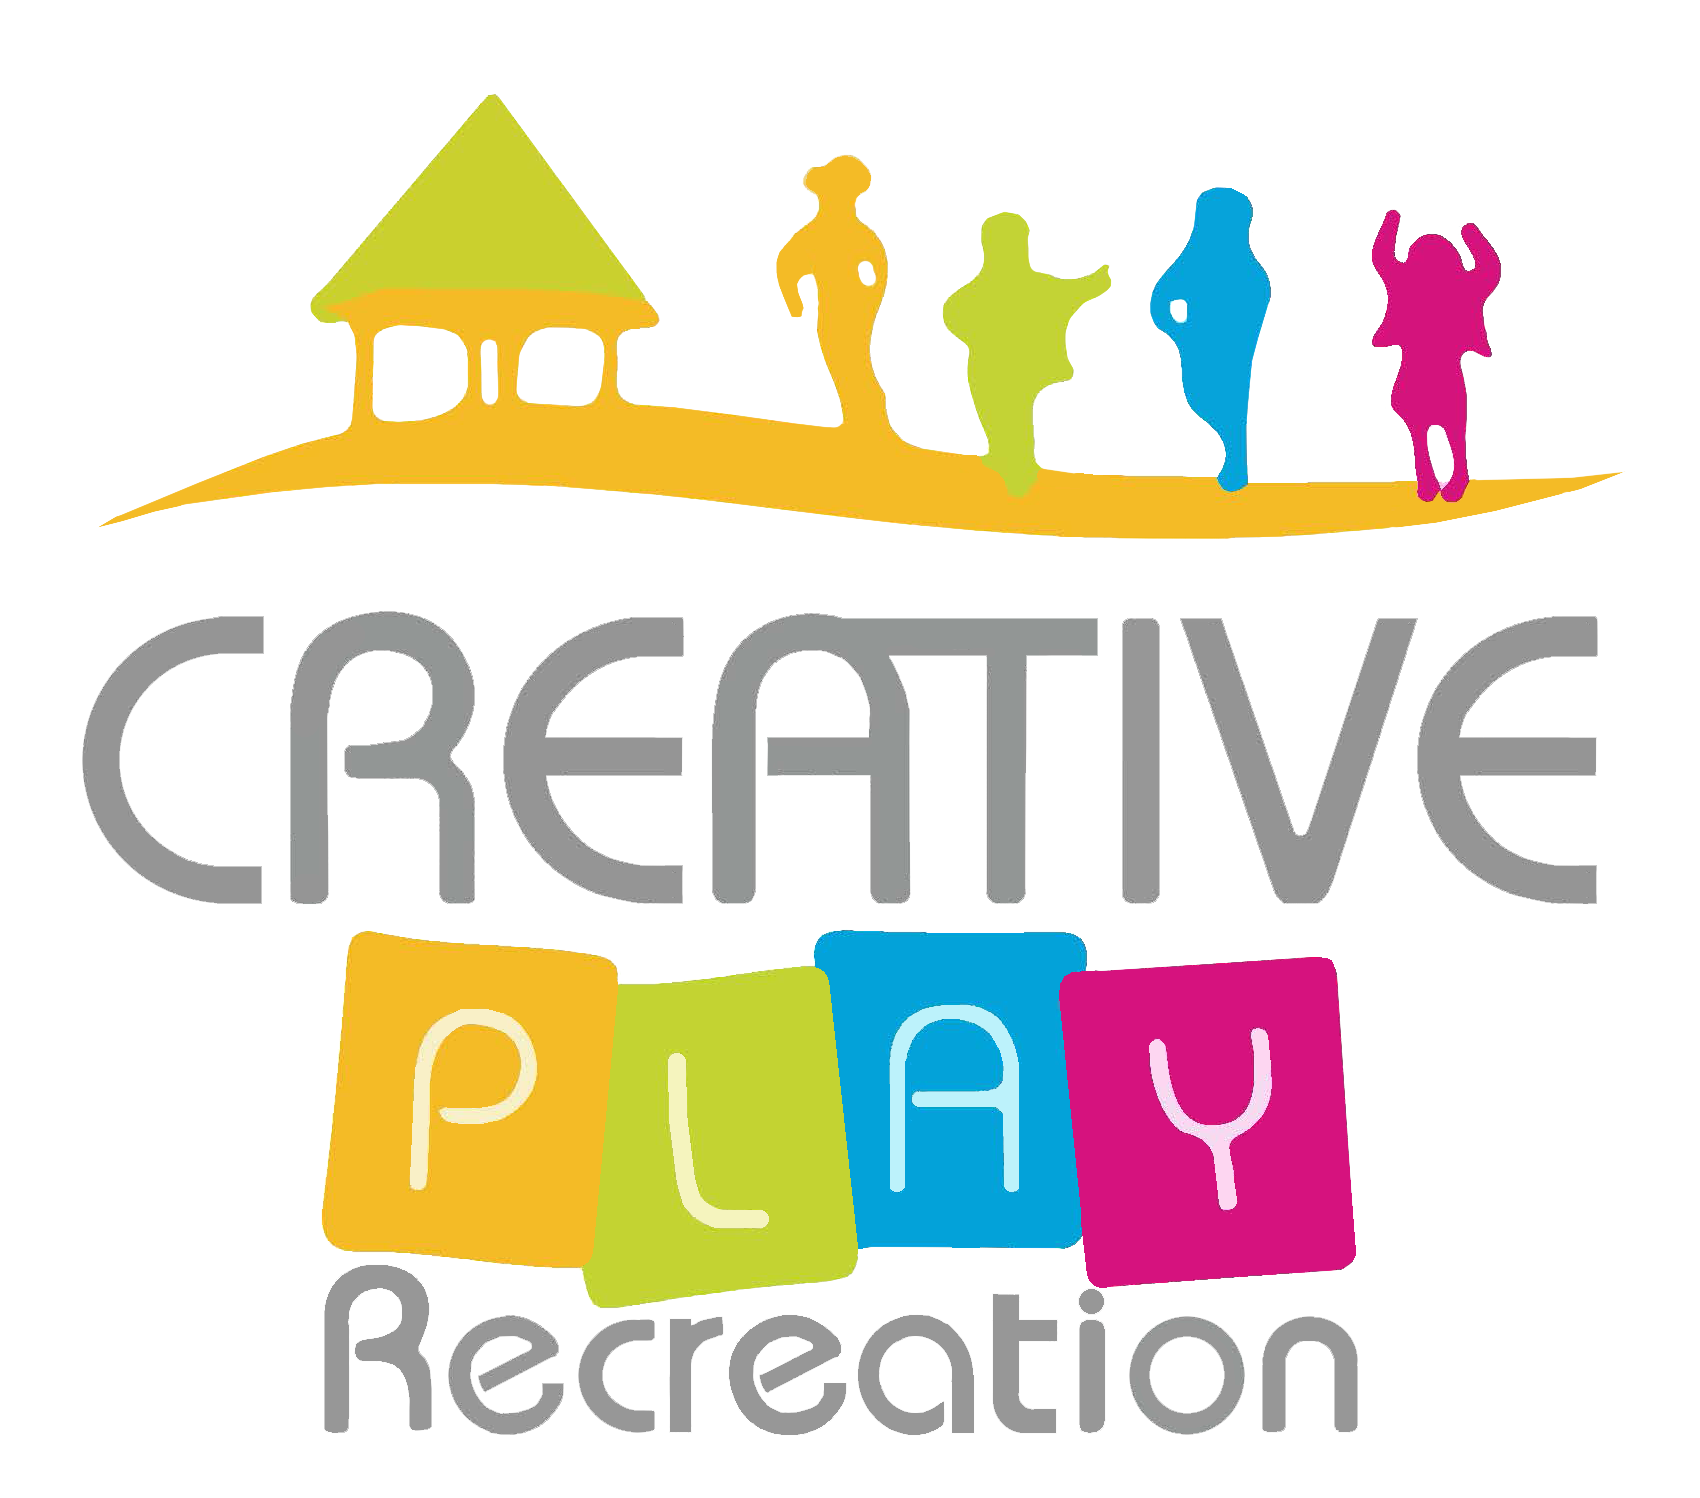 creative recreation website